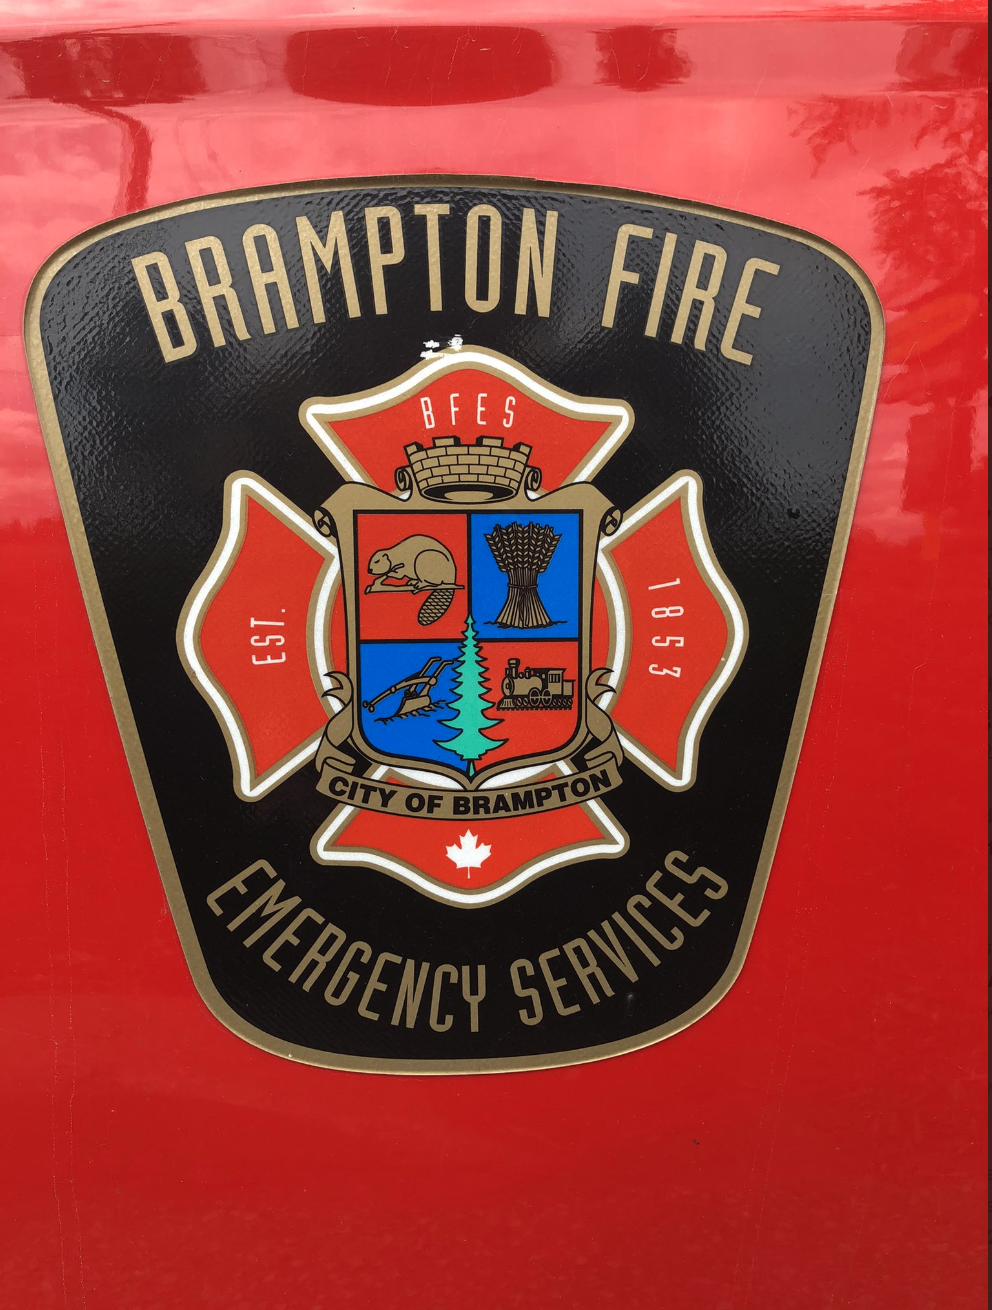 The City of Brampton's fire services logo. 